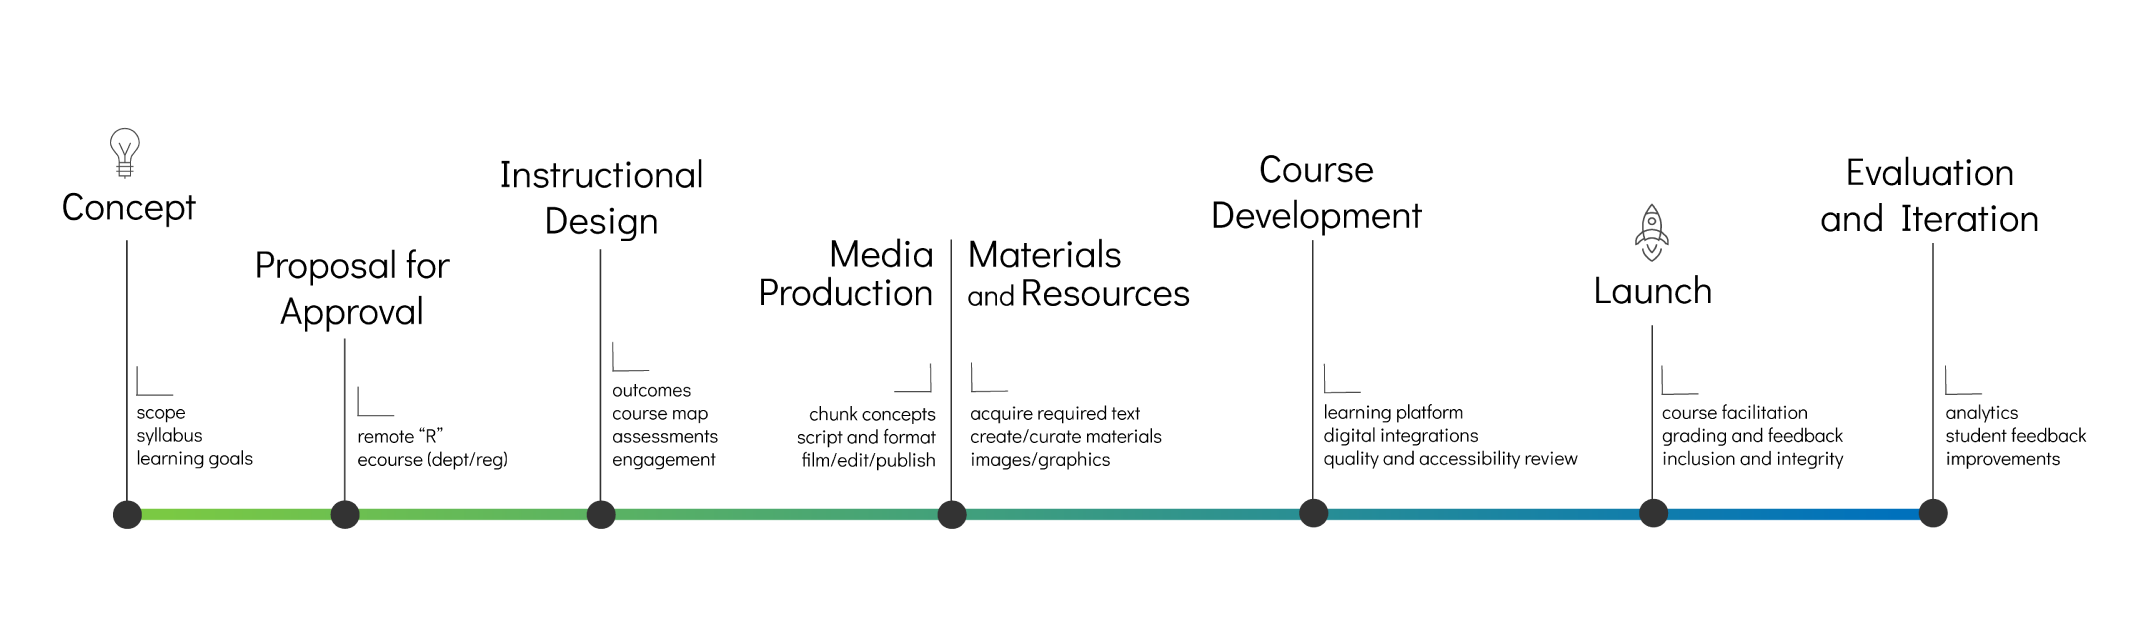 course development timeline